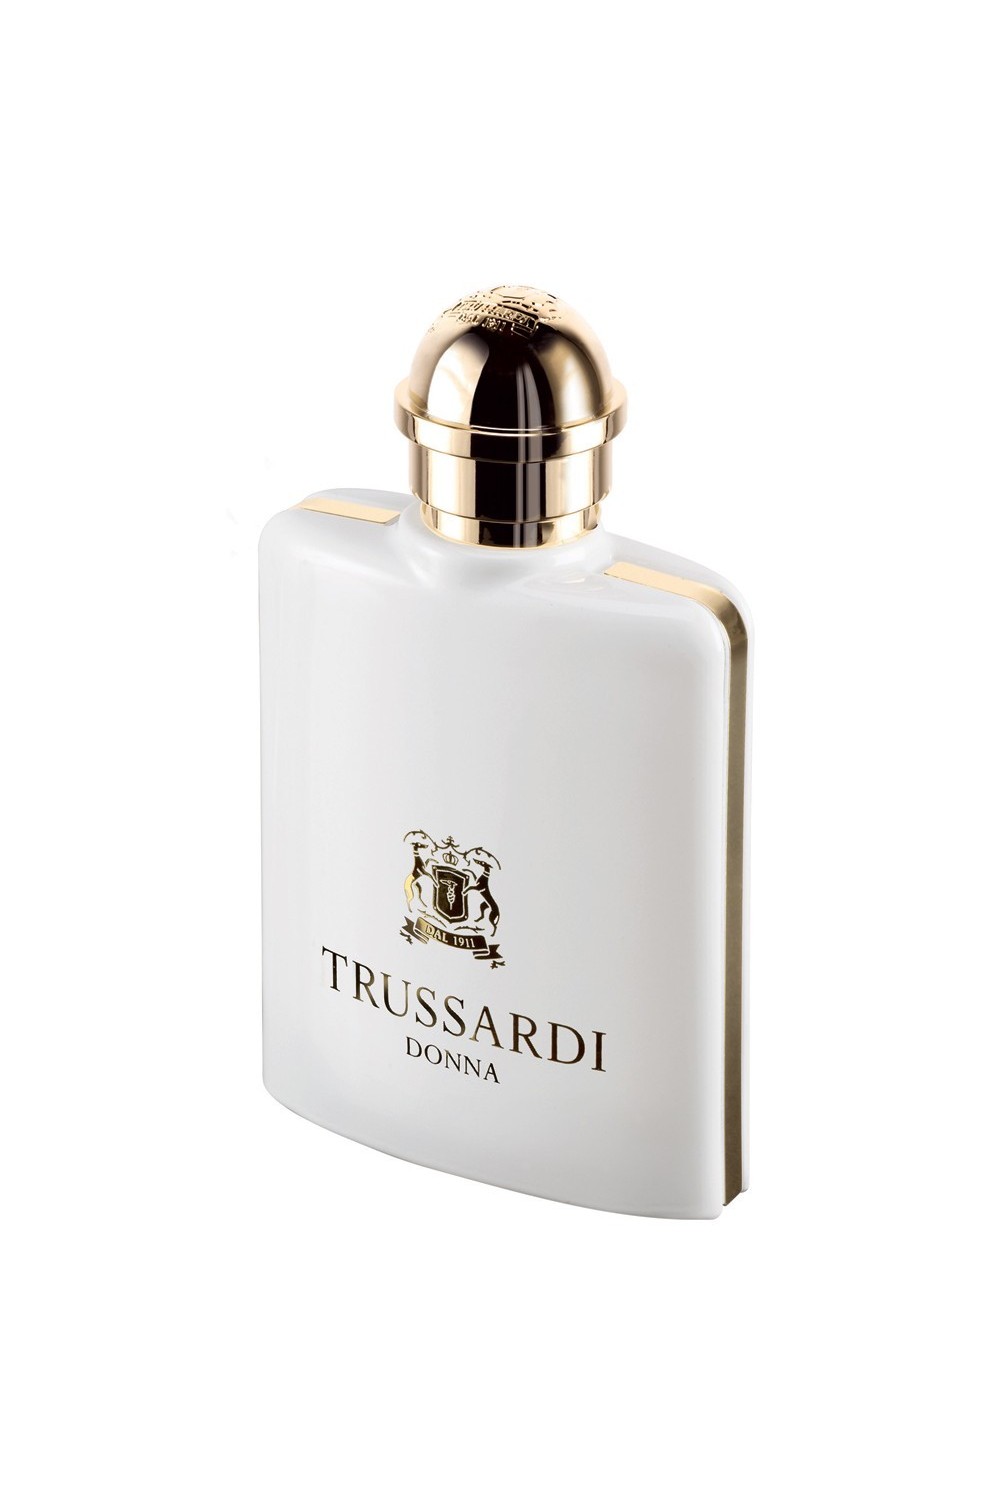 TRUSSARDI - Donna Eau De Perfume Spray 50ml